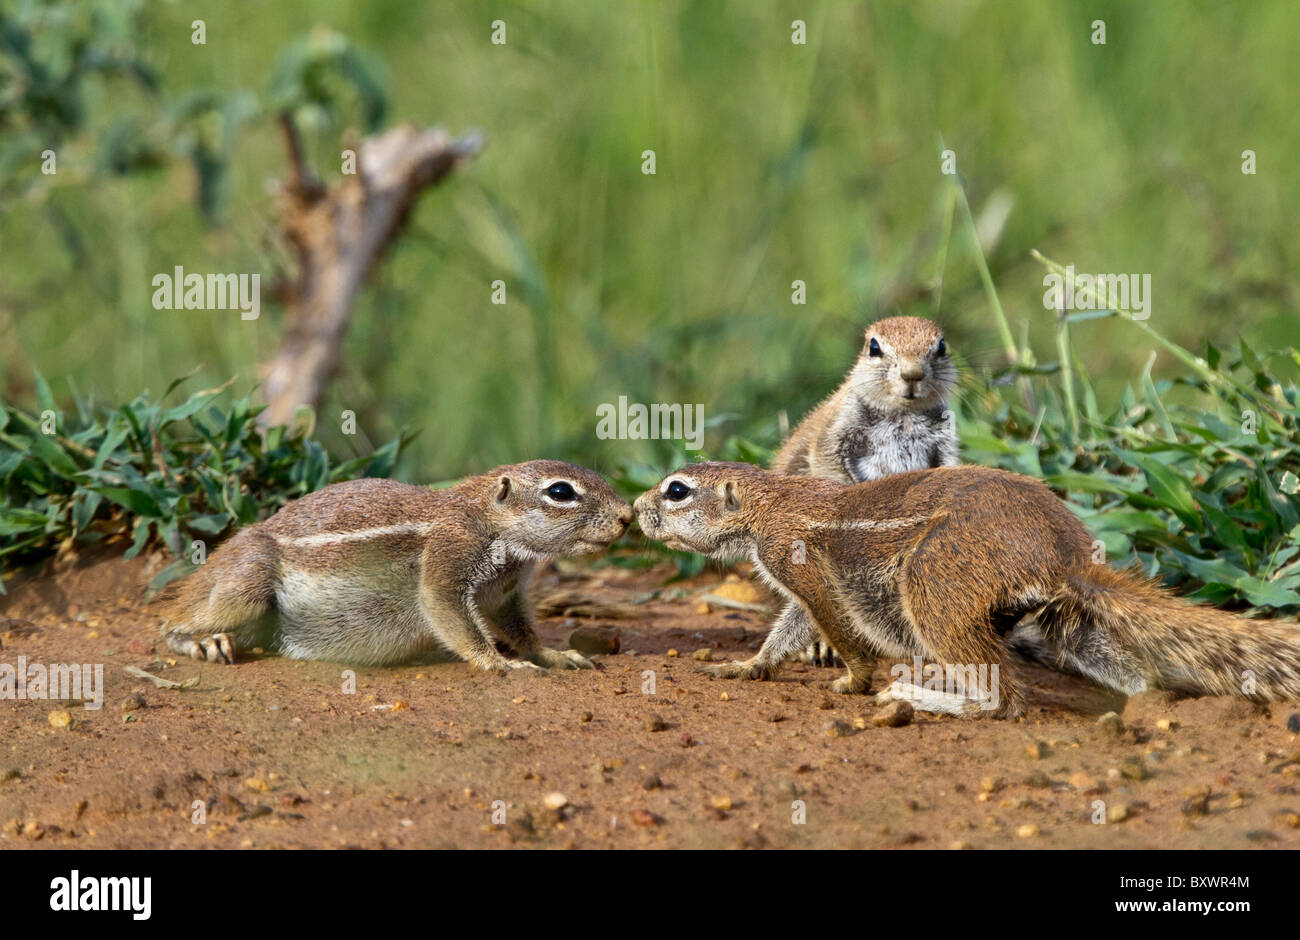 Kap-Erdhörnchen (Xerus Inauris) Nasen berühren, während ein anderer, Madikwe Wildreservat, Südafrika sieht Stockfoto